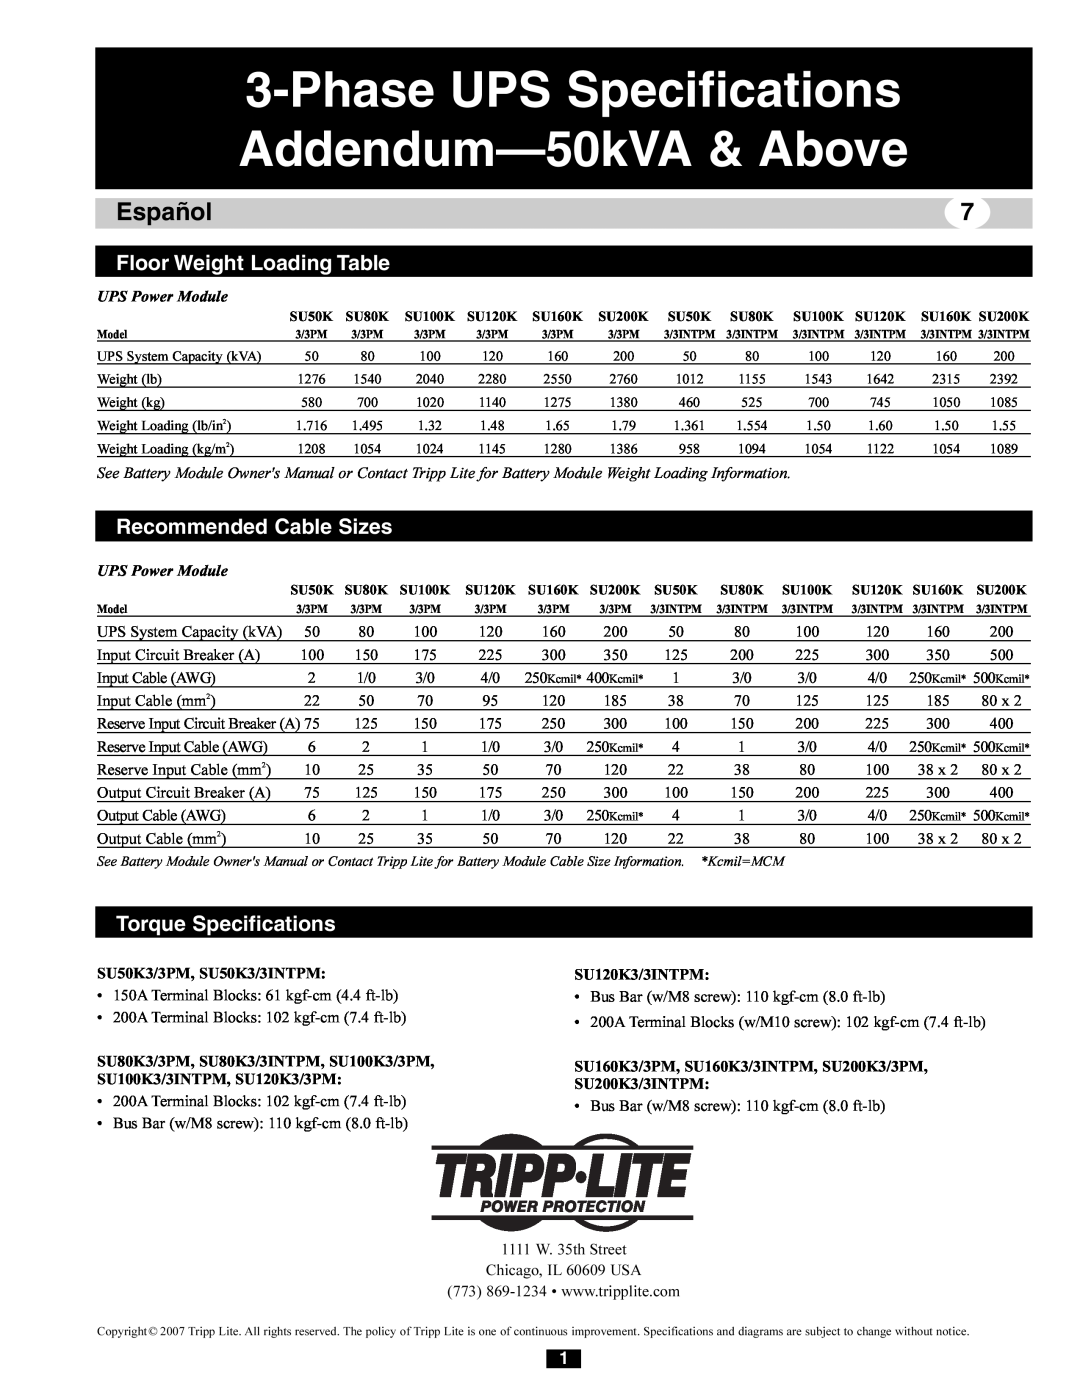 Tripp Lite 230/400V, 240/415V AC Phase UPS Specifications Addendum-50kVA & Above, Español, Floor Weight Loading Table 